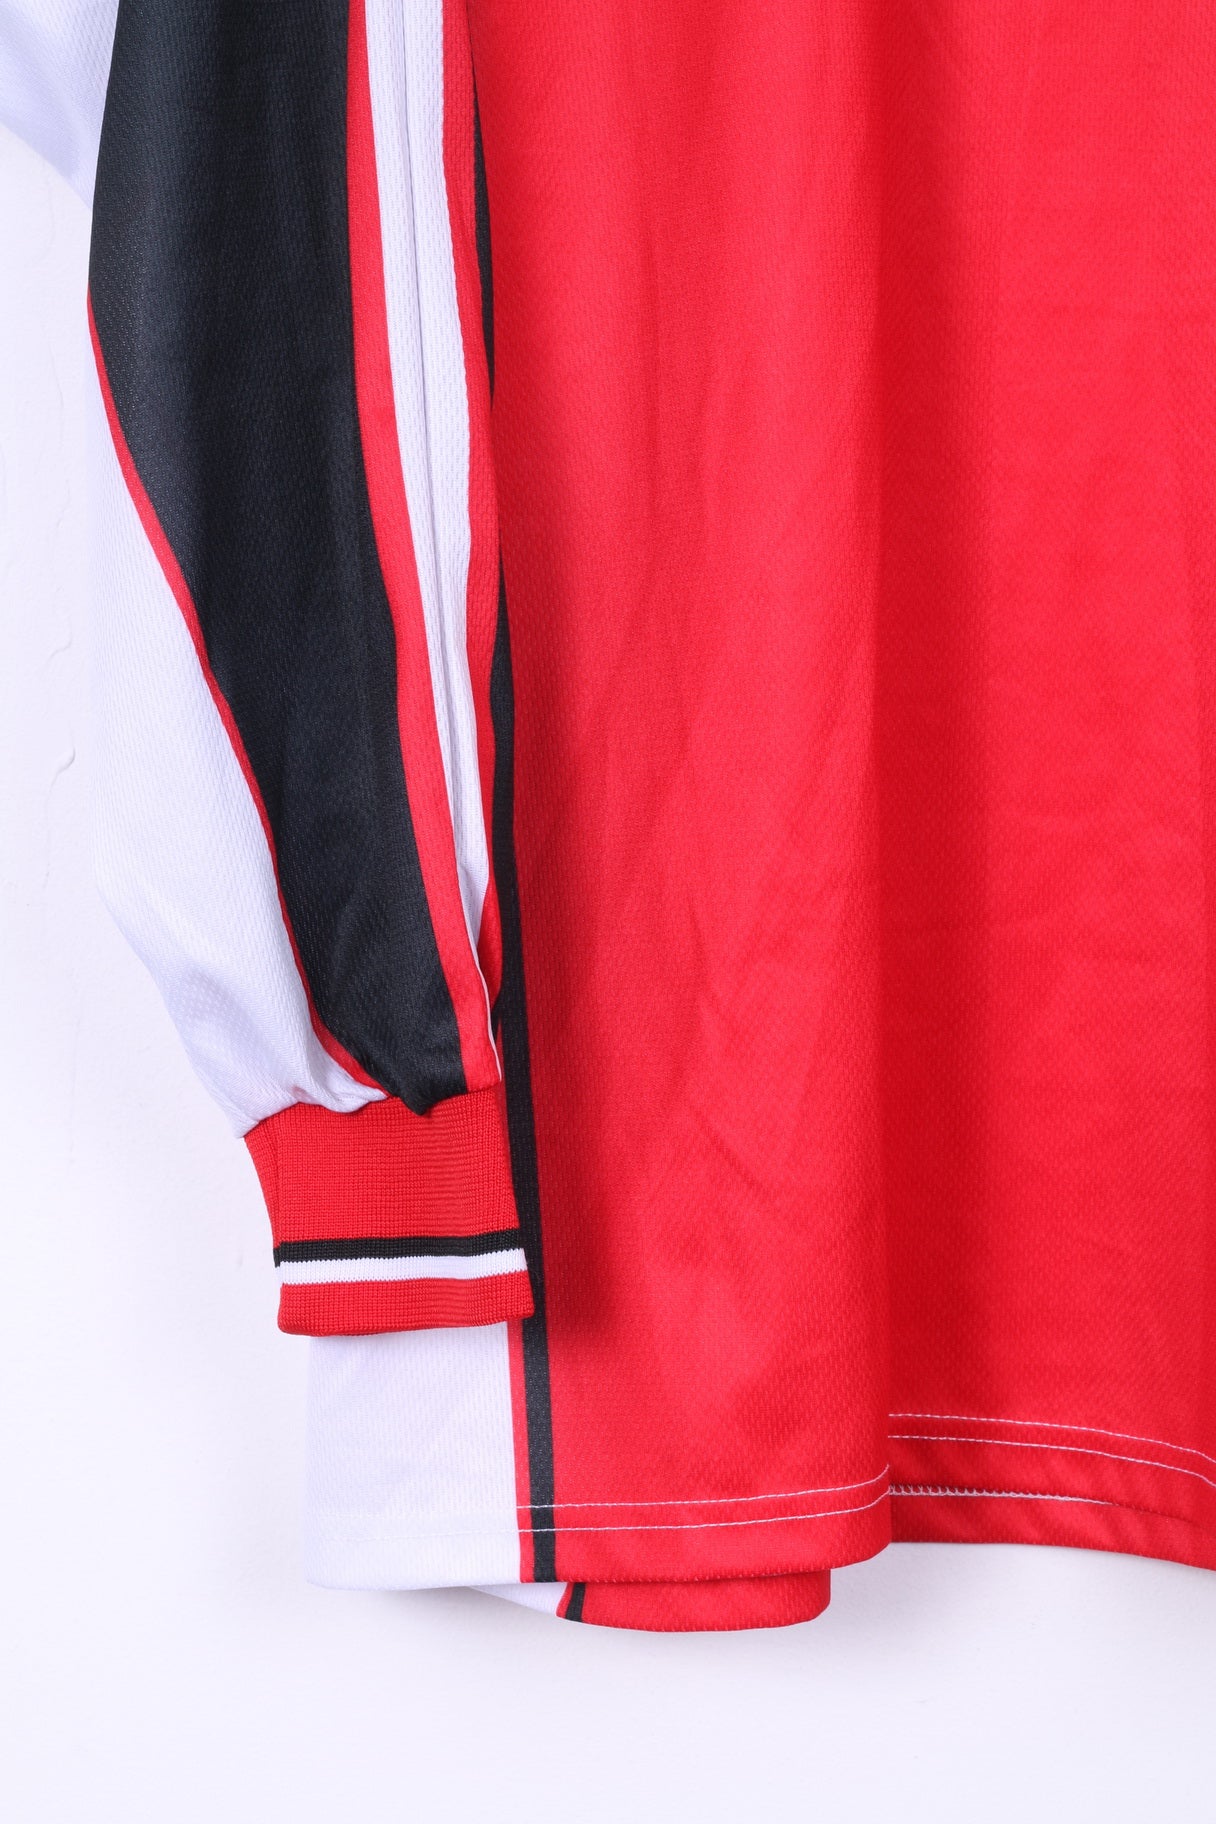 JAKO Mes XL Polo Shirt Red Vfl Rheinbach #5 Football Jersey Long Sleeve